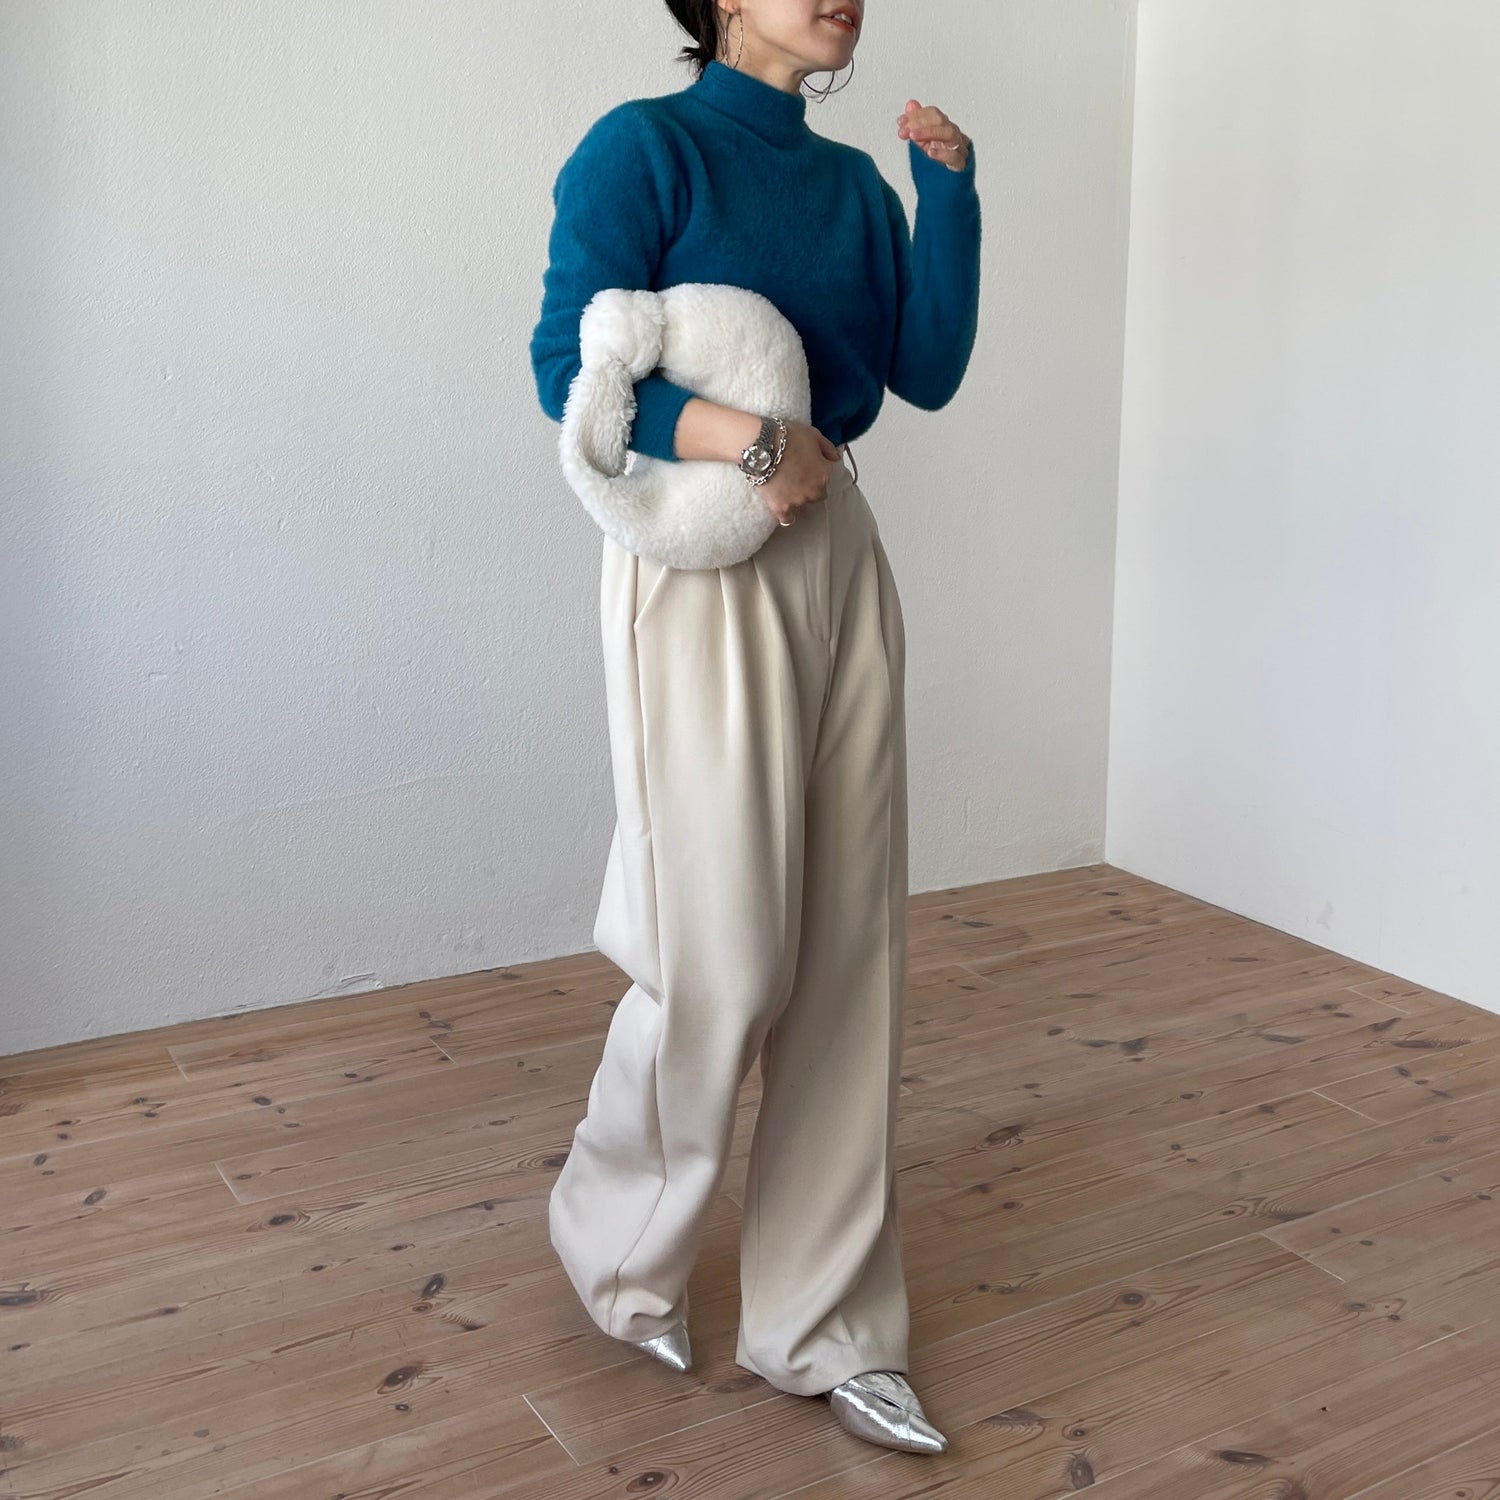 【SAMPLE】petit high neck compact shaggy knit / blue